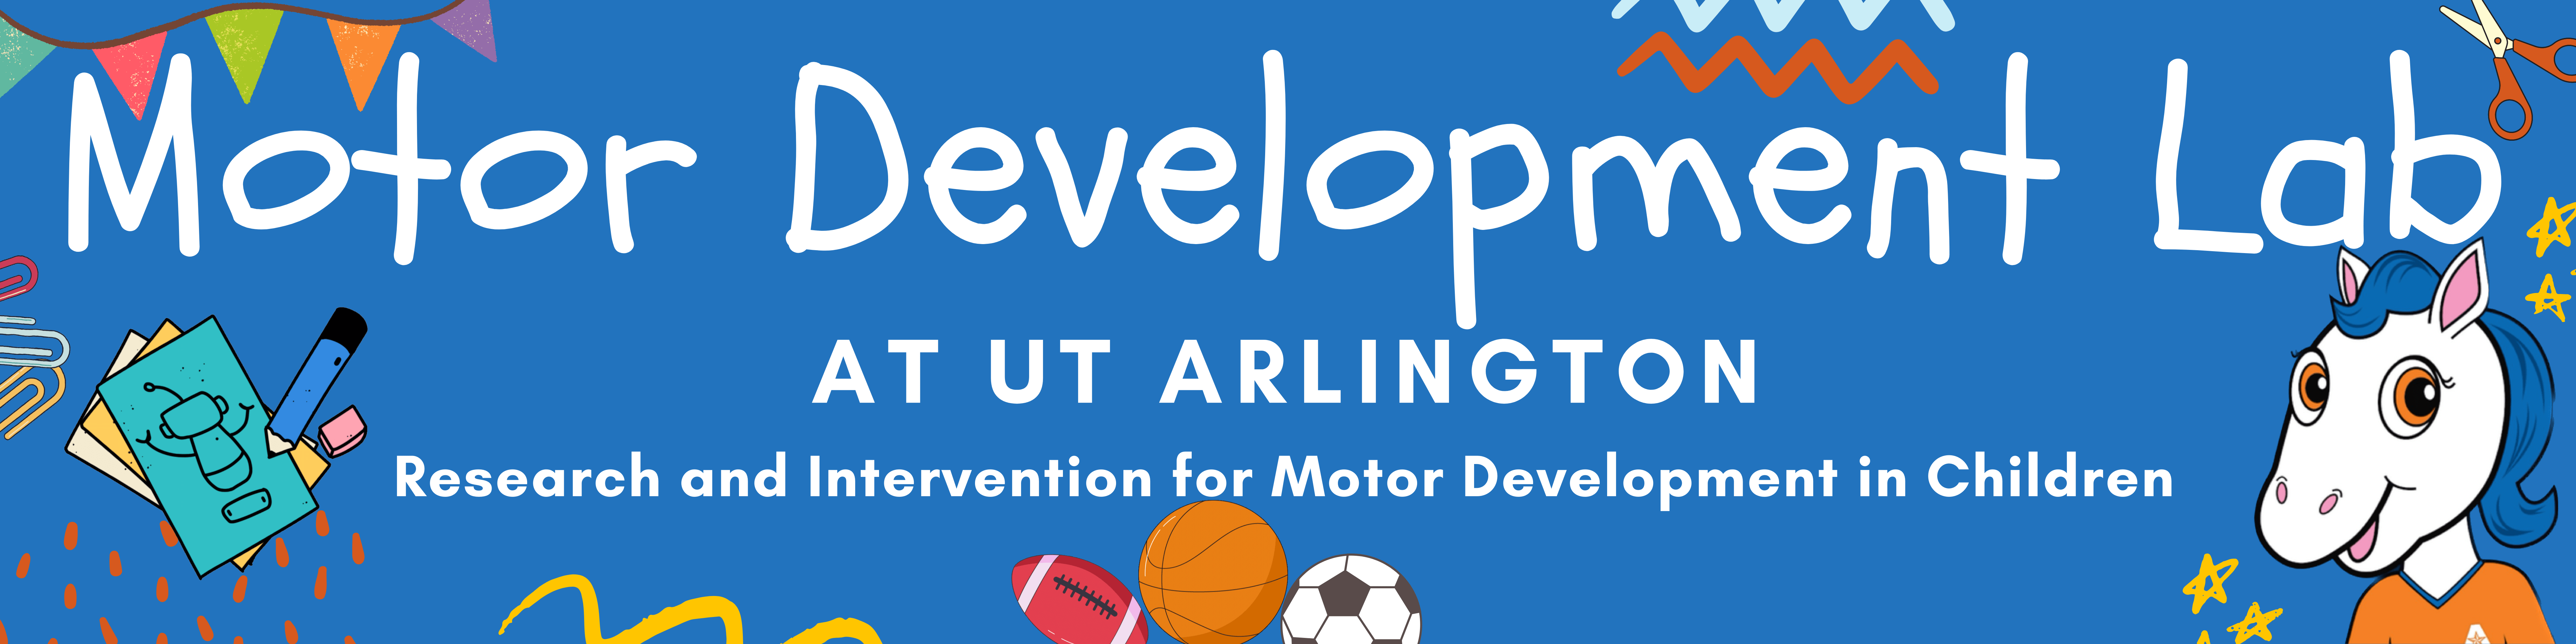 Motor Development Lab  at UT Arlington